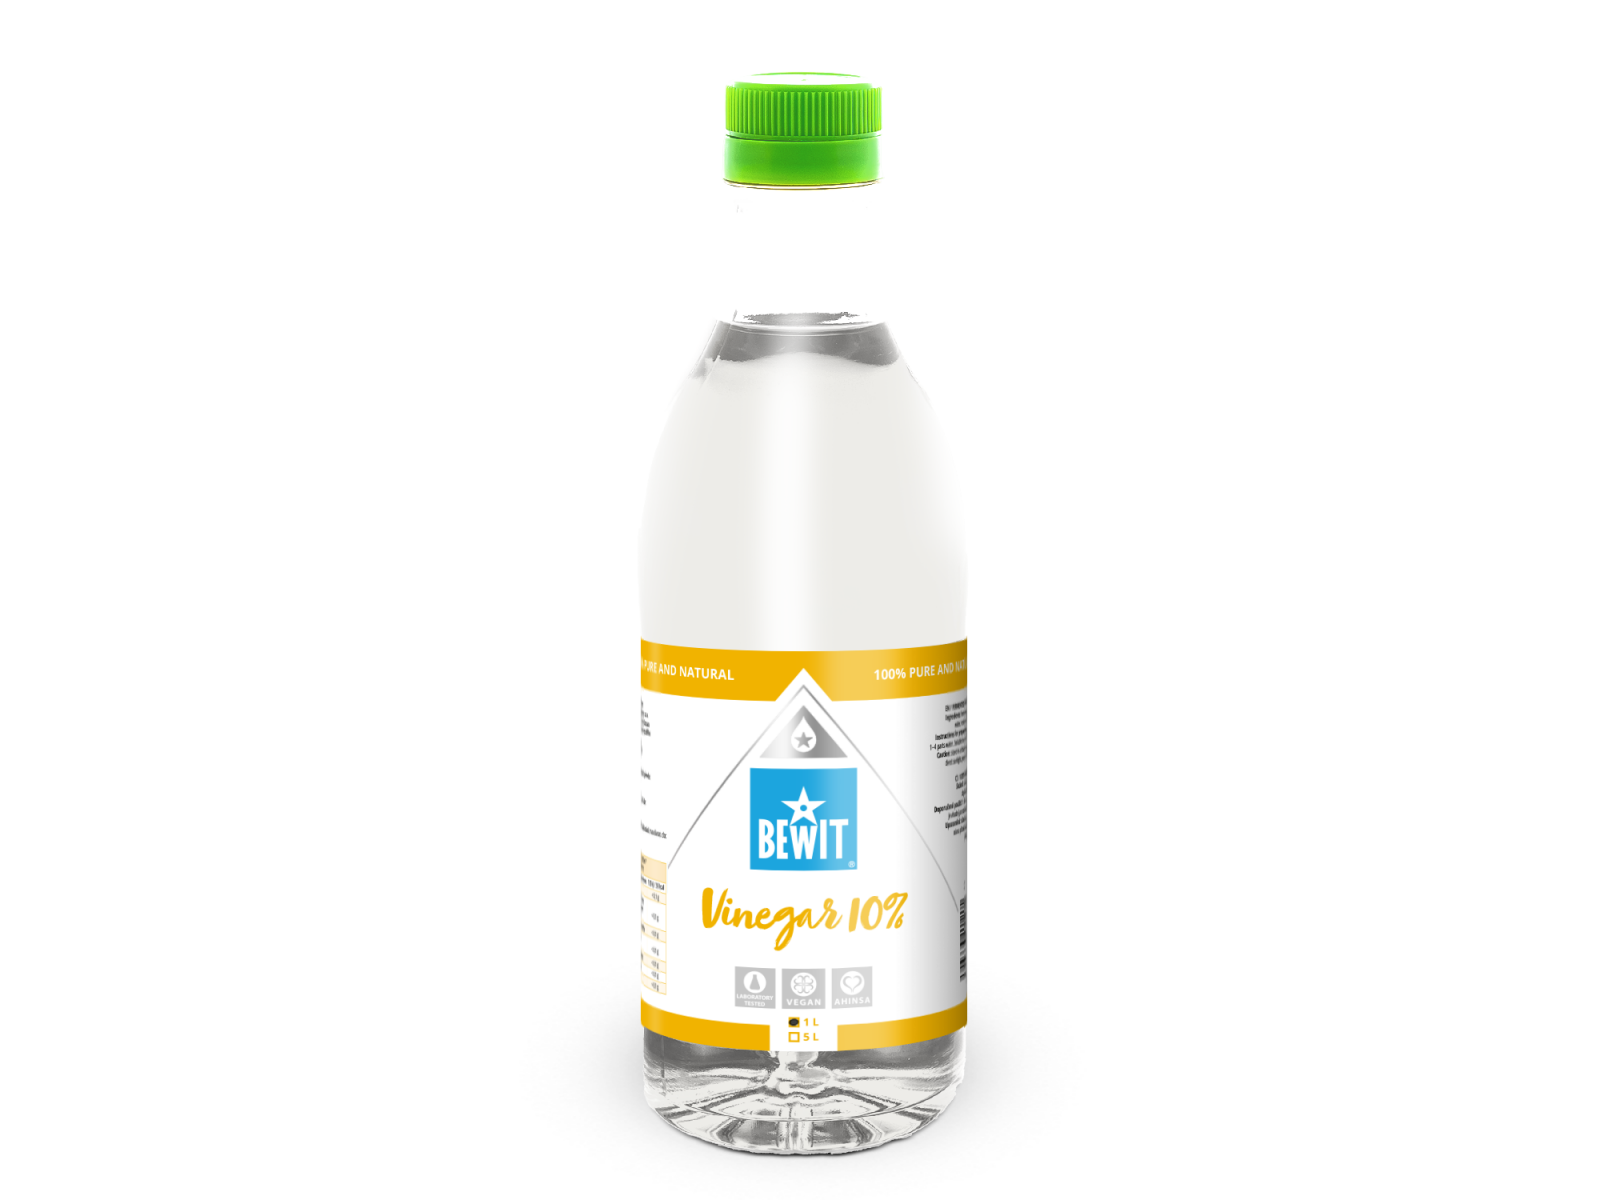 BEWIT White alcohol fermented vinegar 10% -  - 1